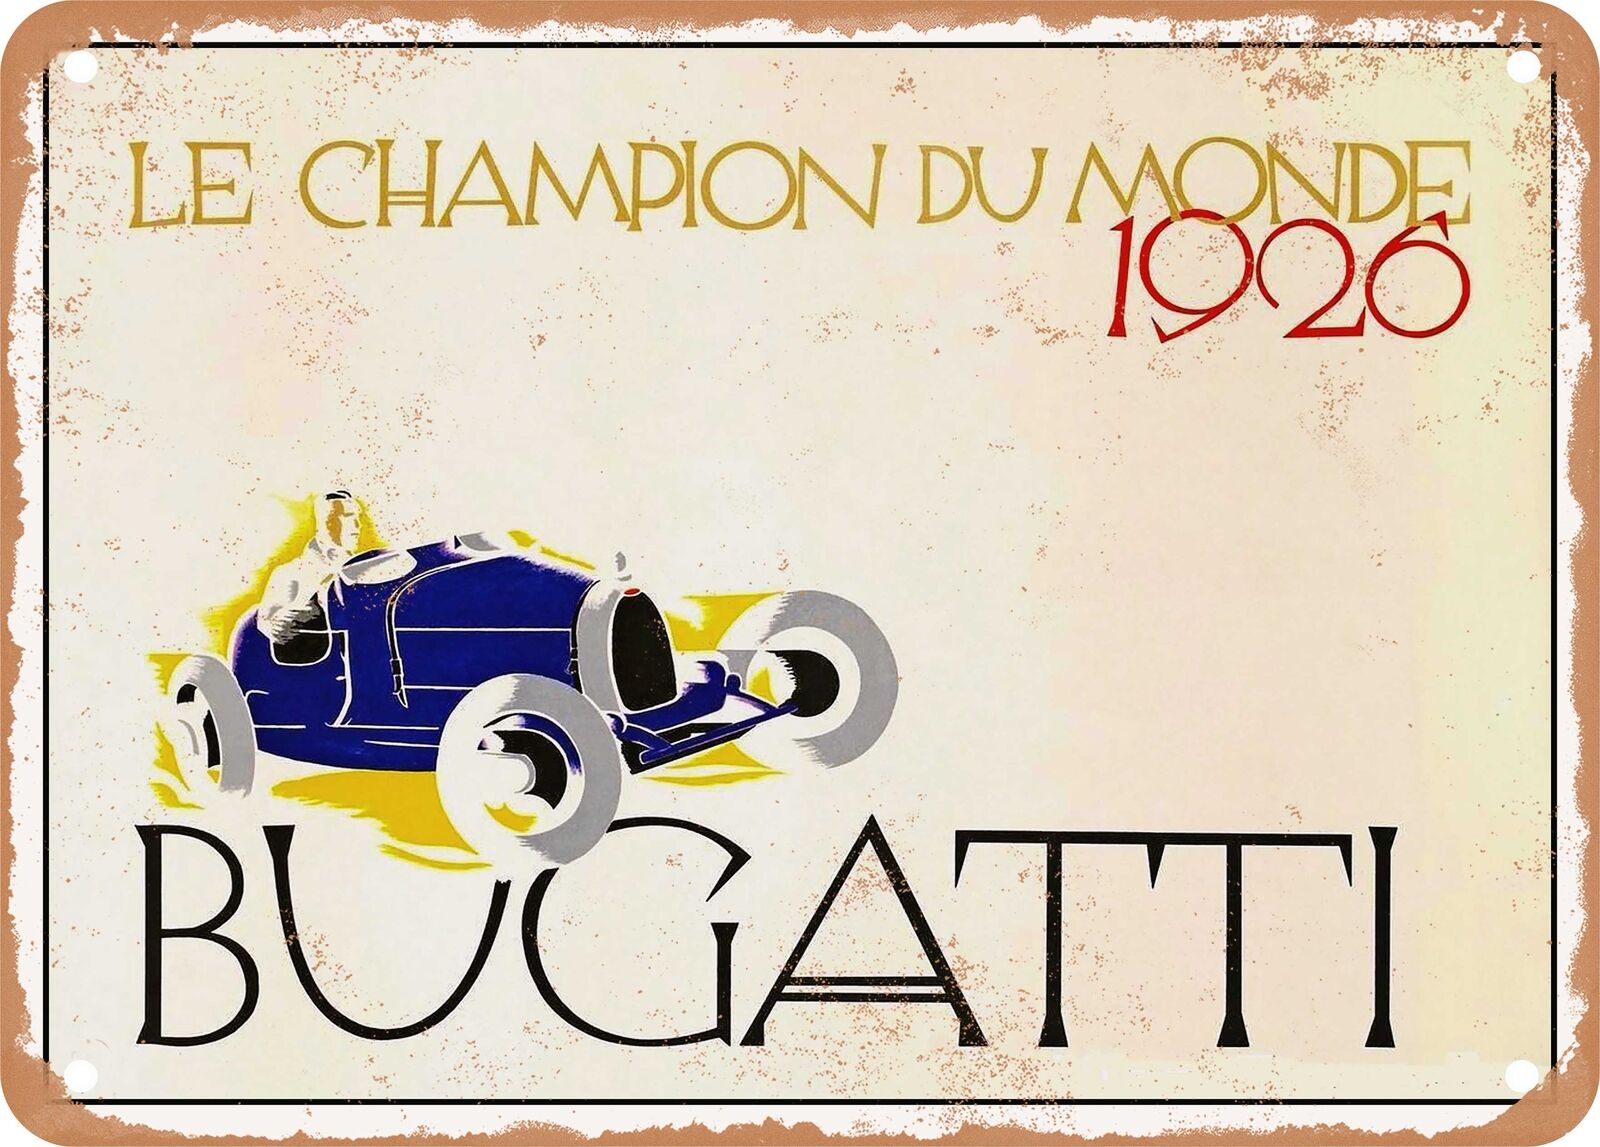 METAL SIGN - 1926 Bugatti The world champion Vintage Ad